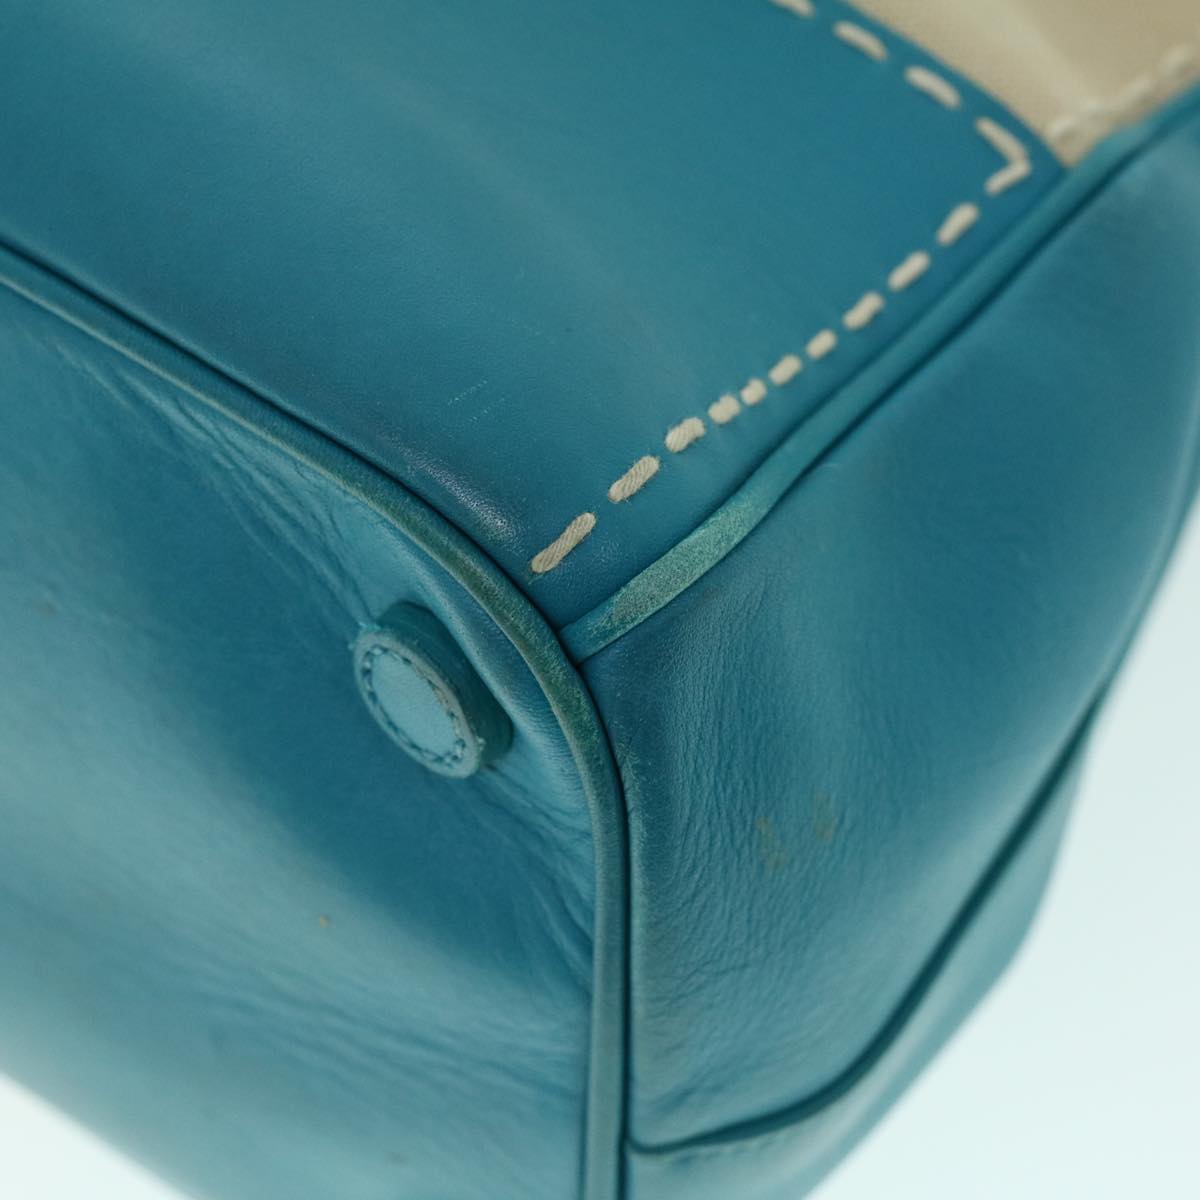 PRADA Hand Bag Canvas Leather Light Blue Beige Auth 54032